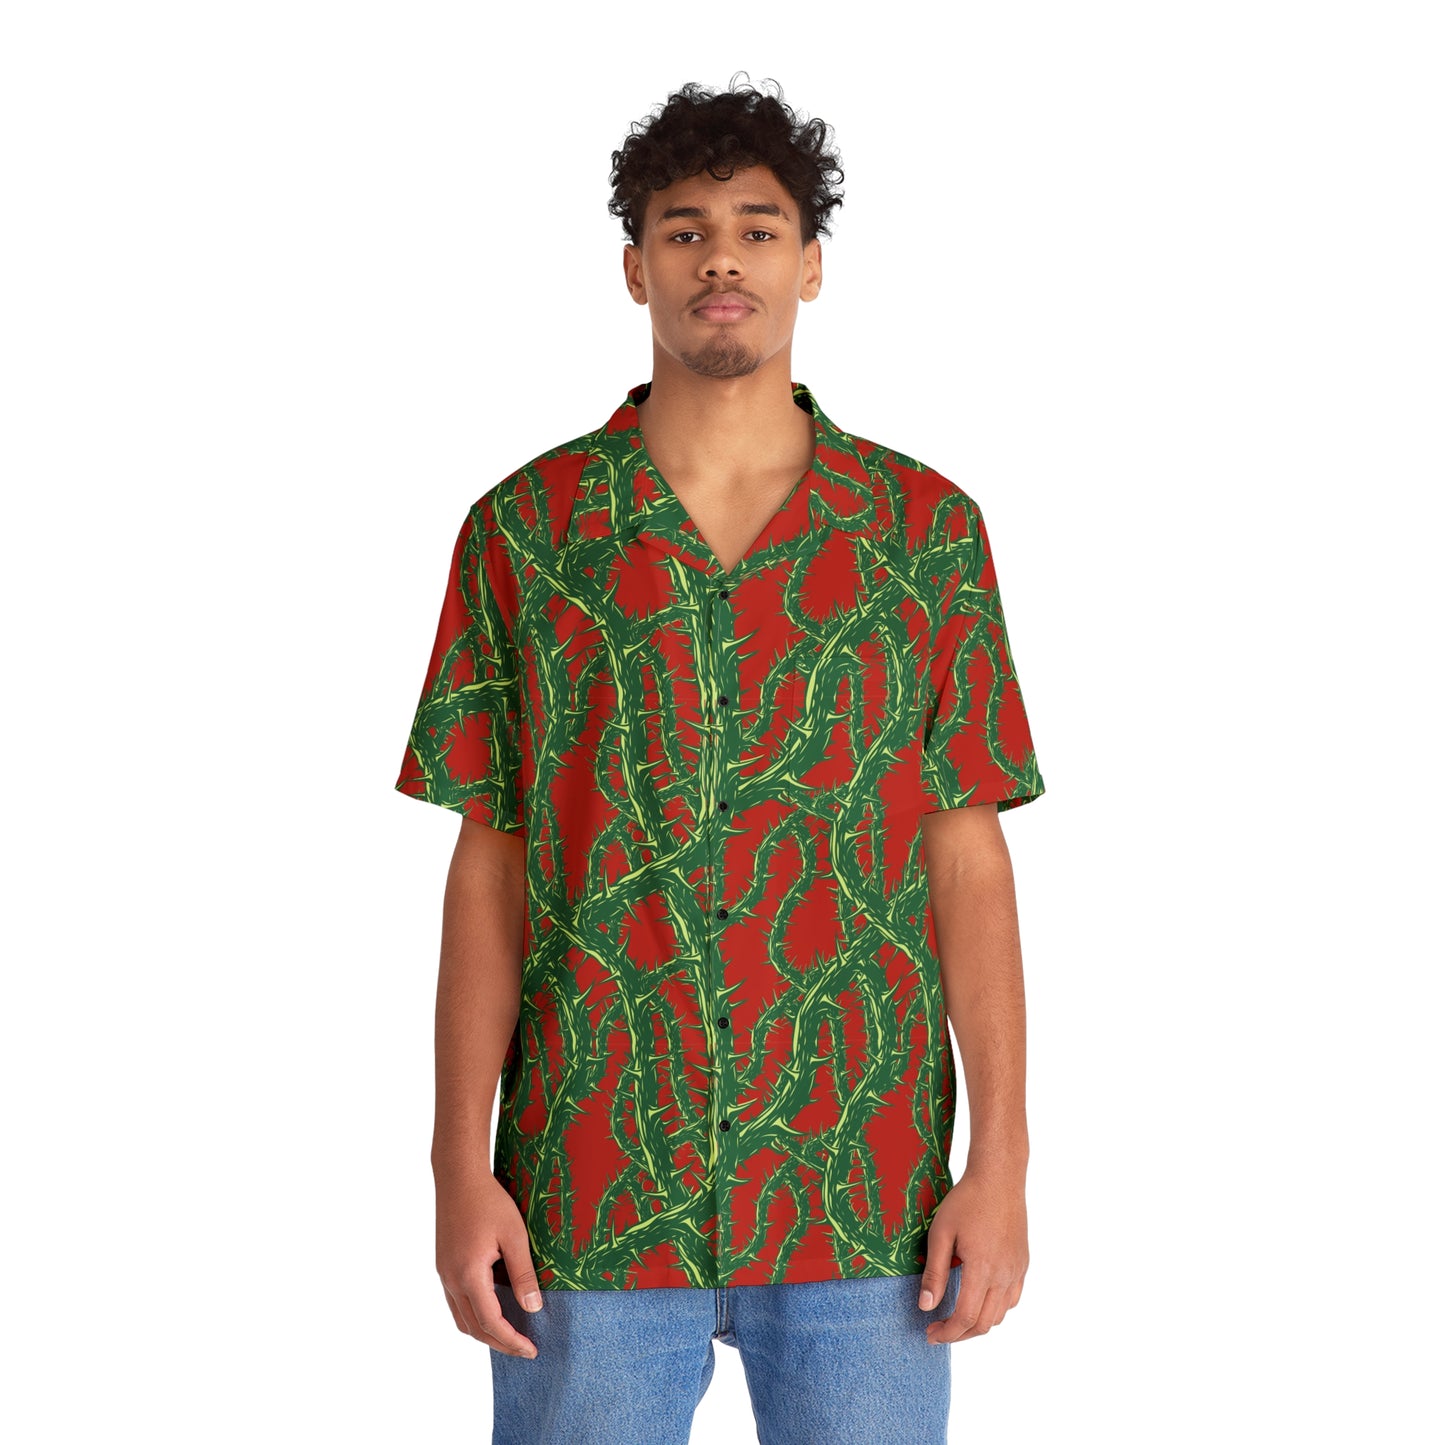 Brambles (Poppy) Aloha Shirt by Studio Ten Design